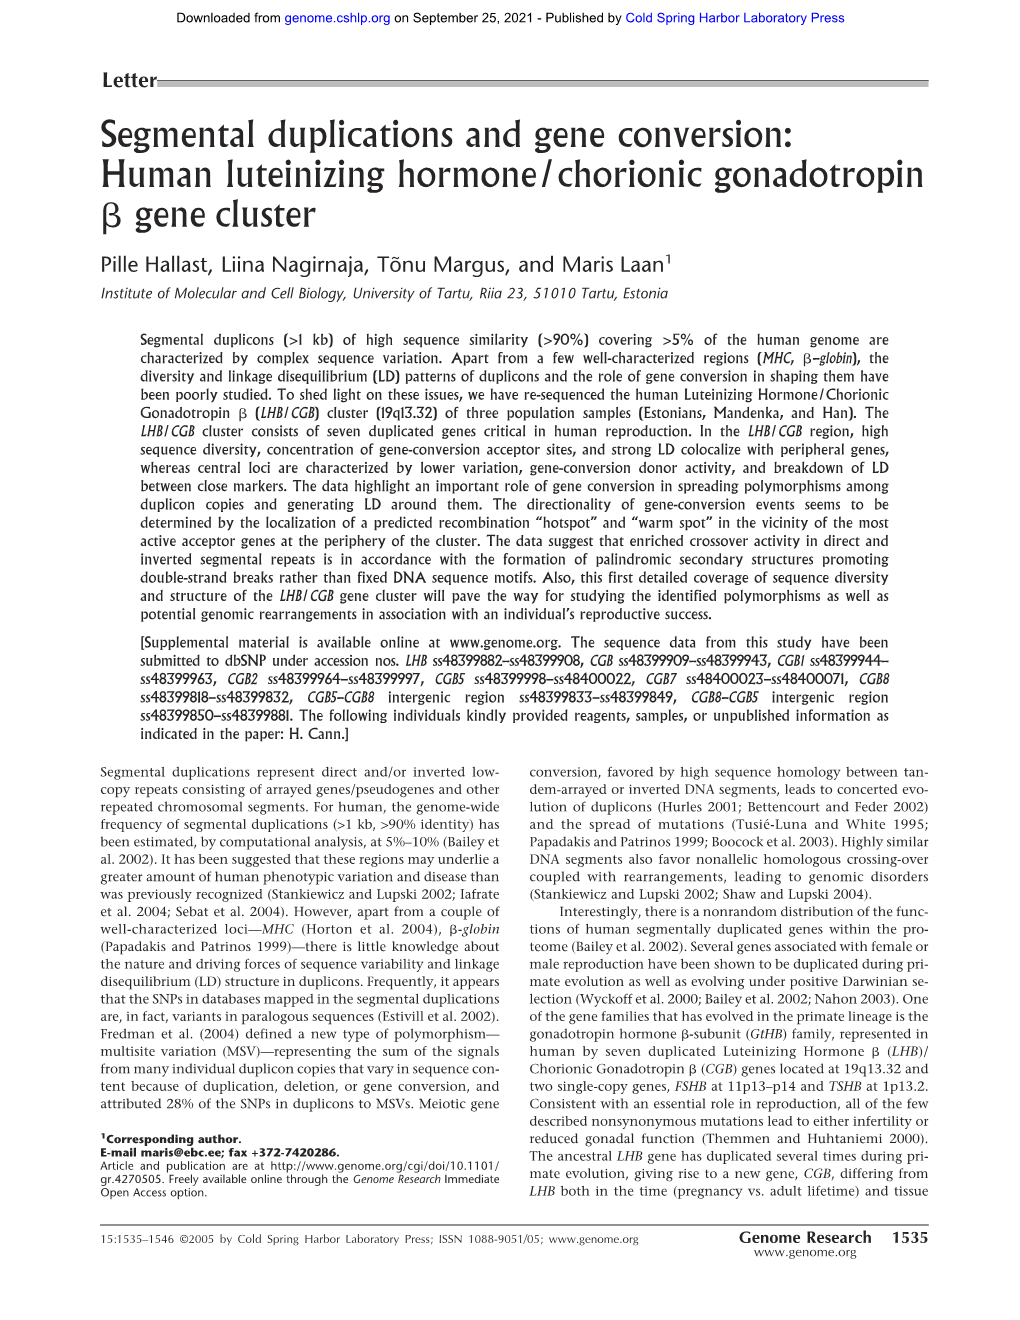 Segmental Duplications and Gene Conversion: Human Luteinizing Hormone/Chorionic Gonadotropin ␤ Gene Cluster